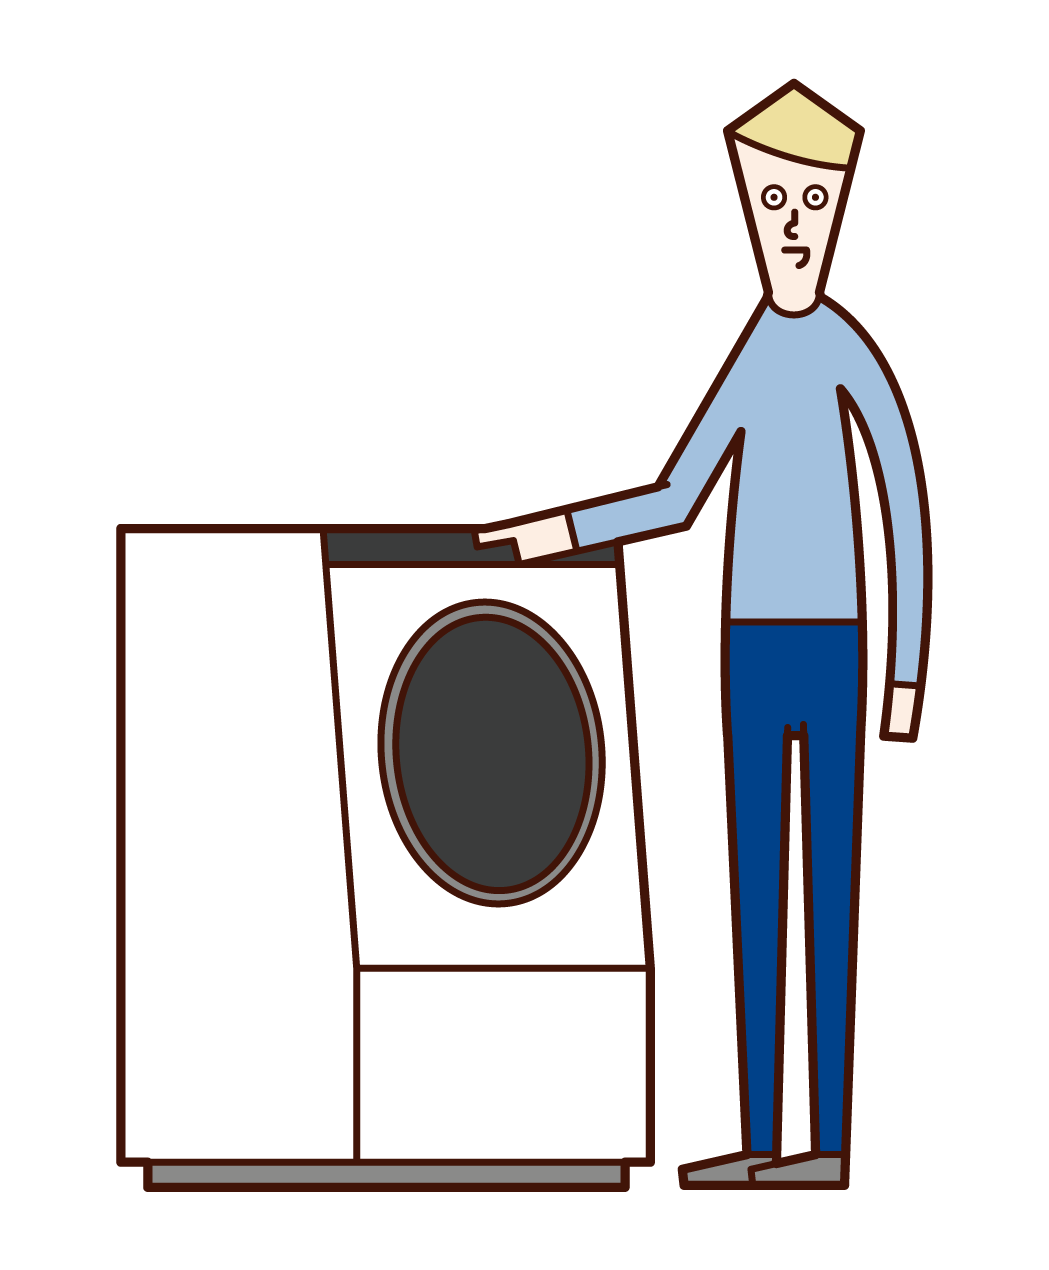 Illustration of a man using a washing machine